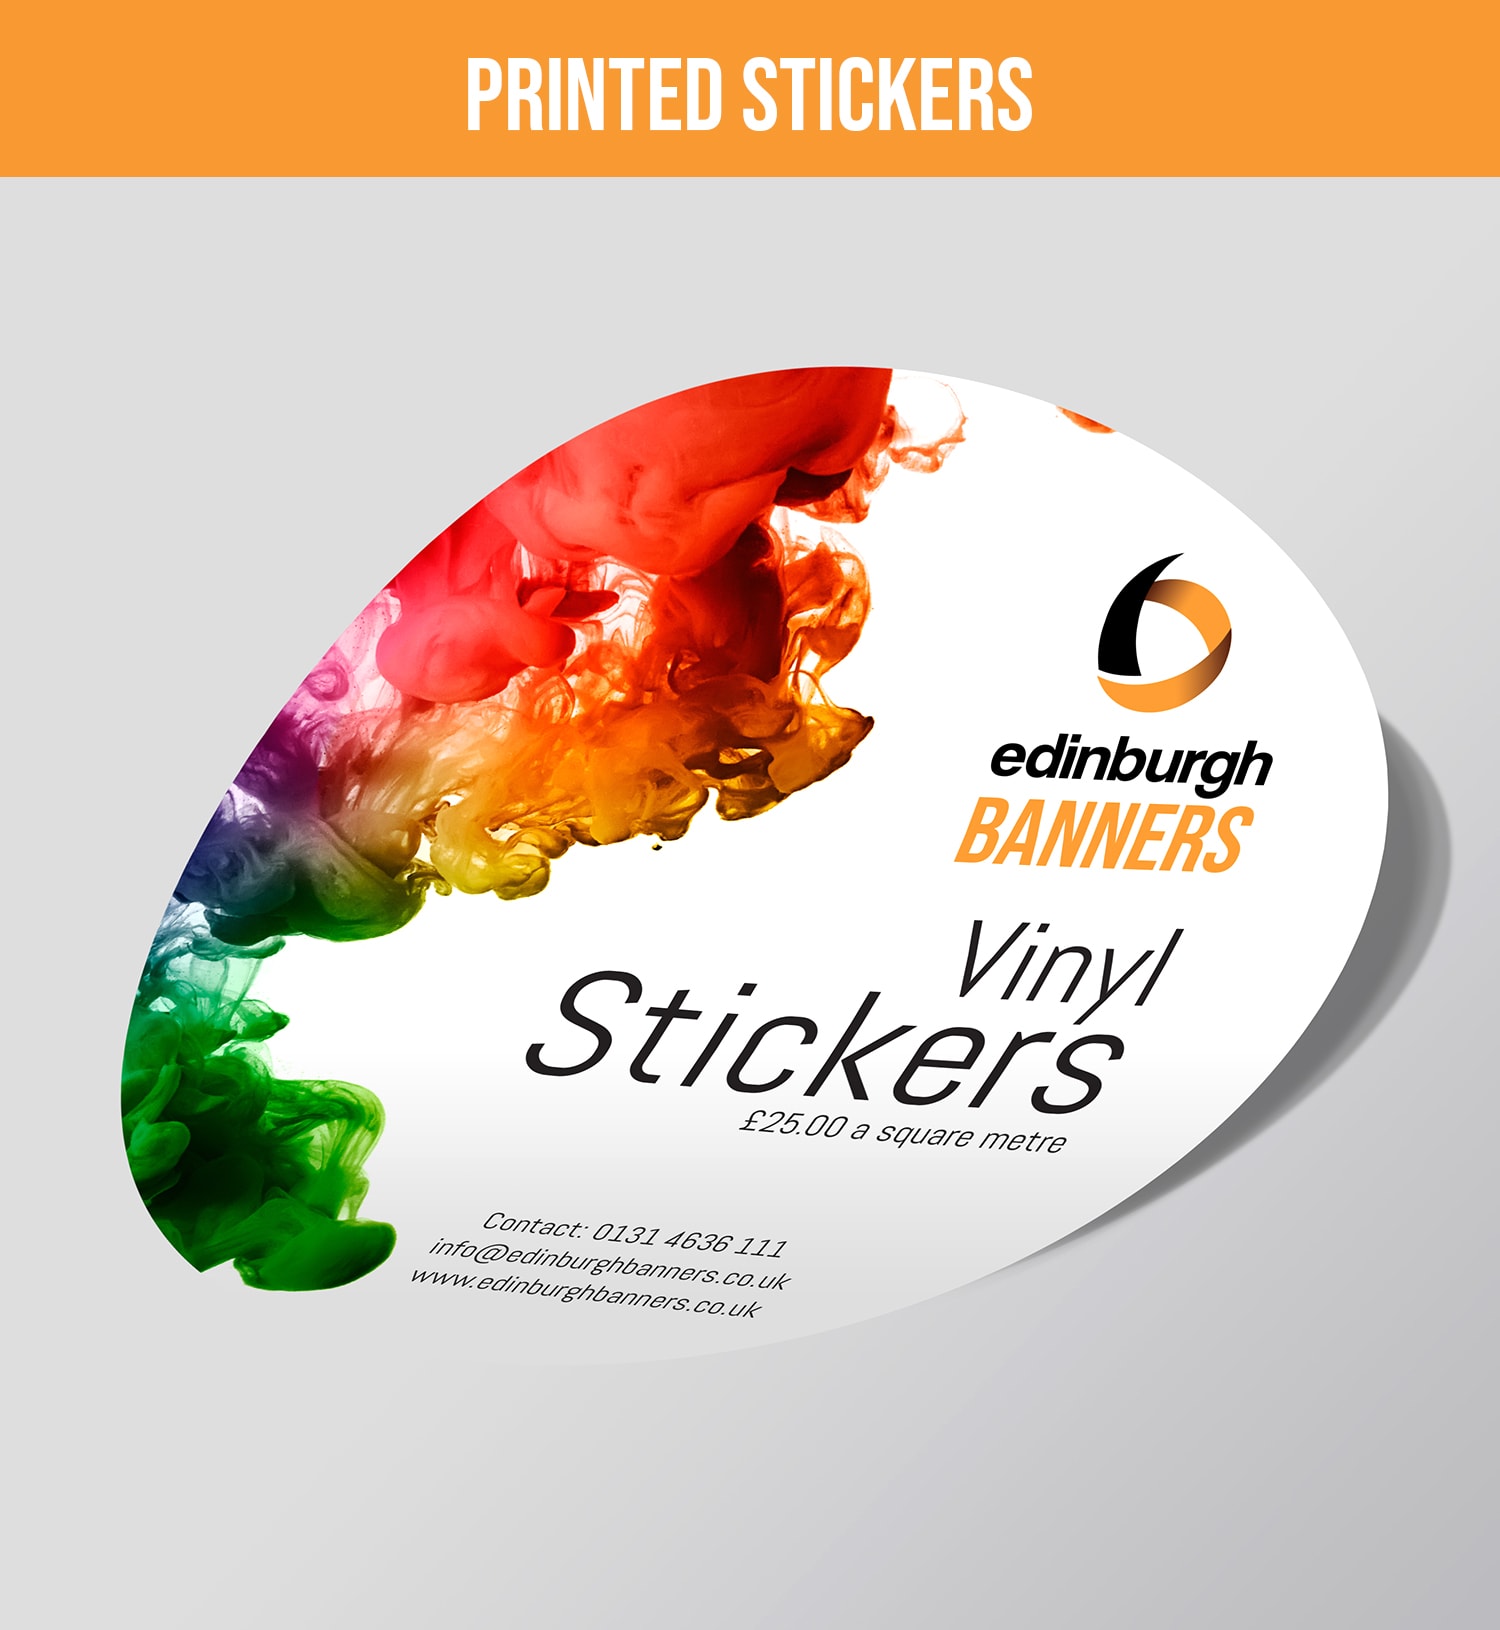 Edinburgh Banners Printed Stickers